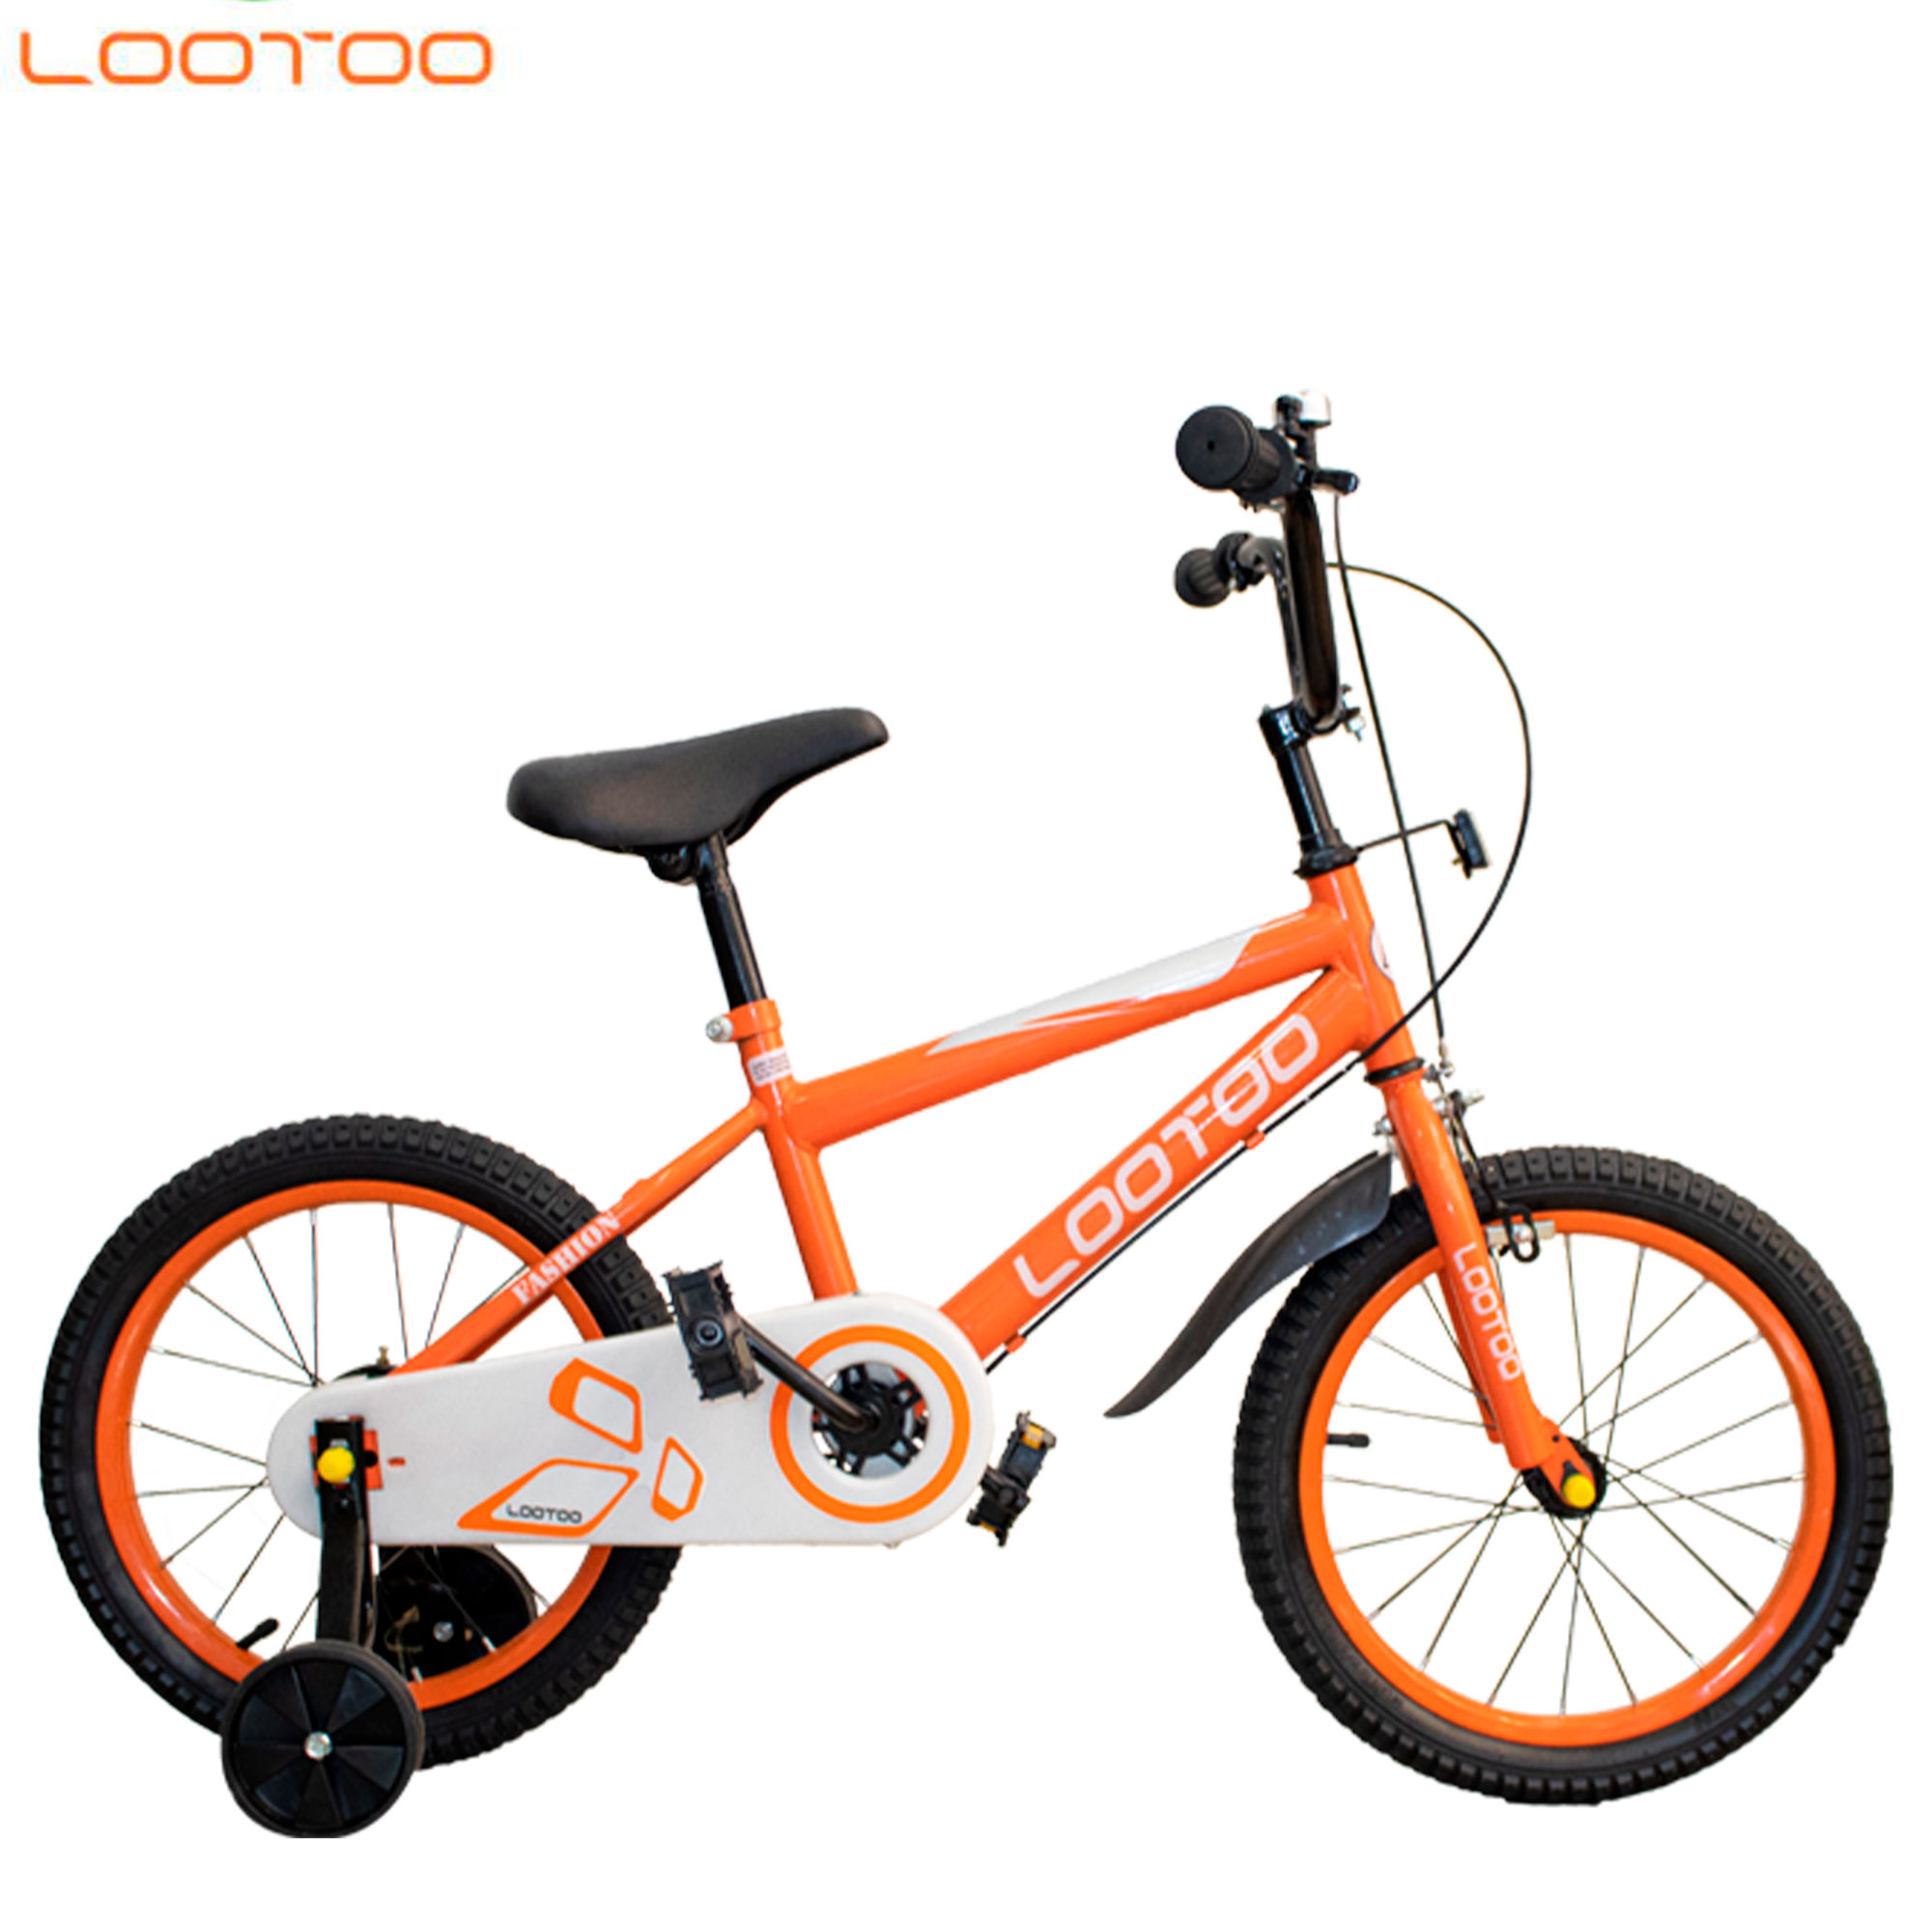 Bicicleta RIN 16 naranja - Multimax